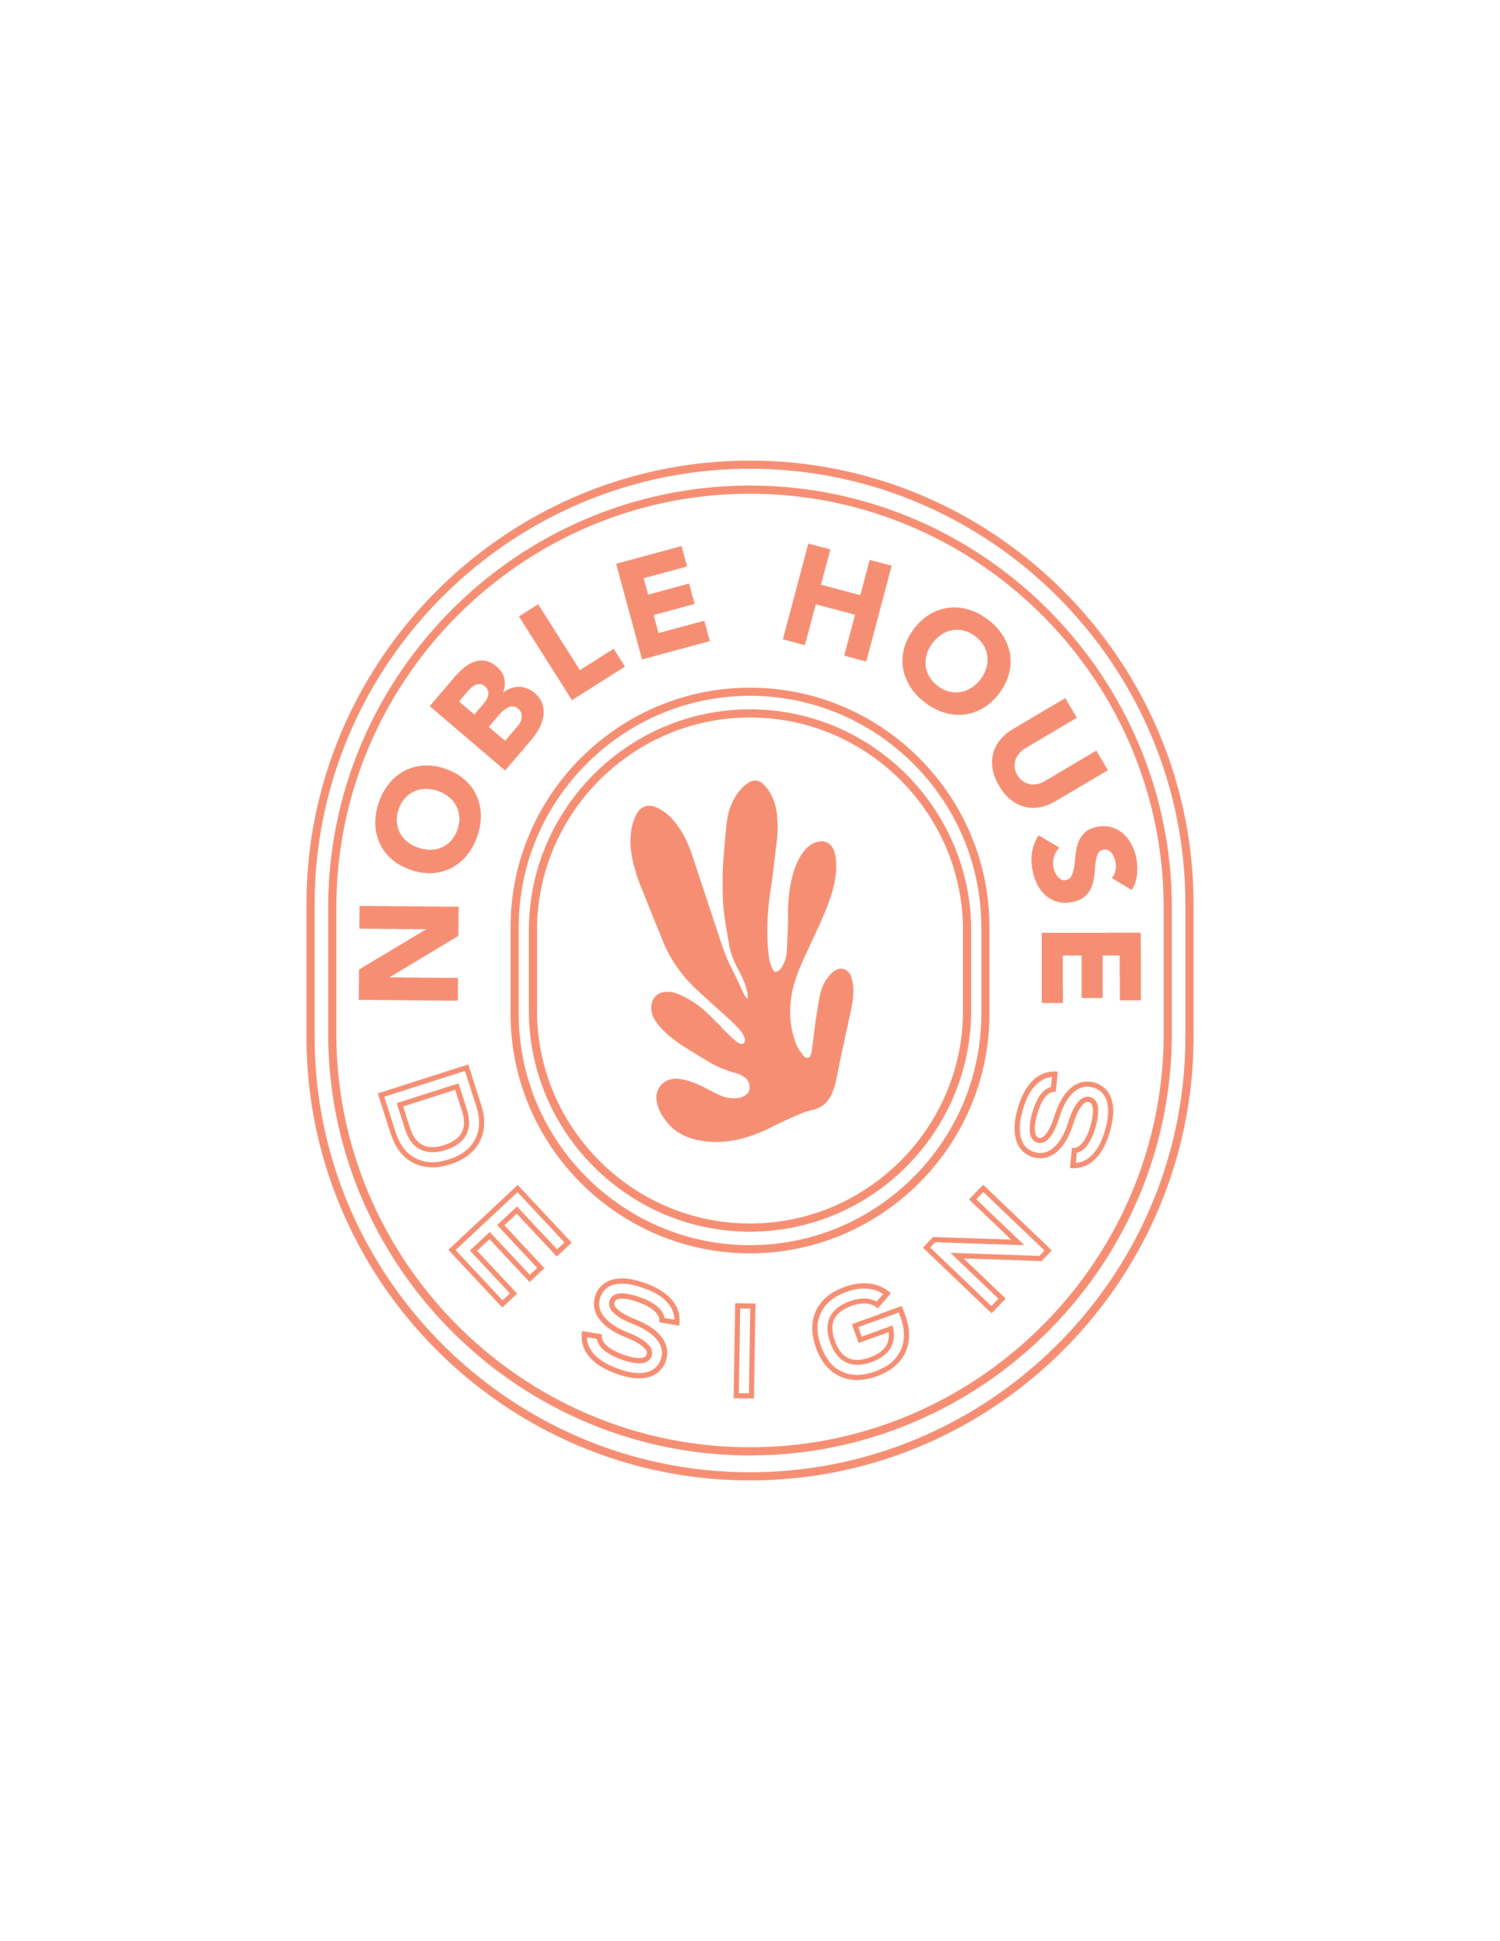  Noble House Designs